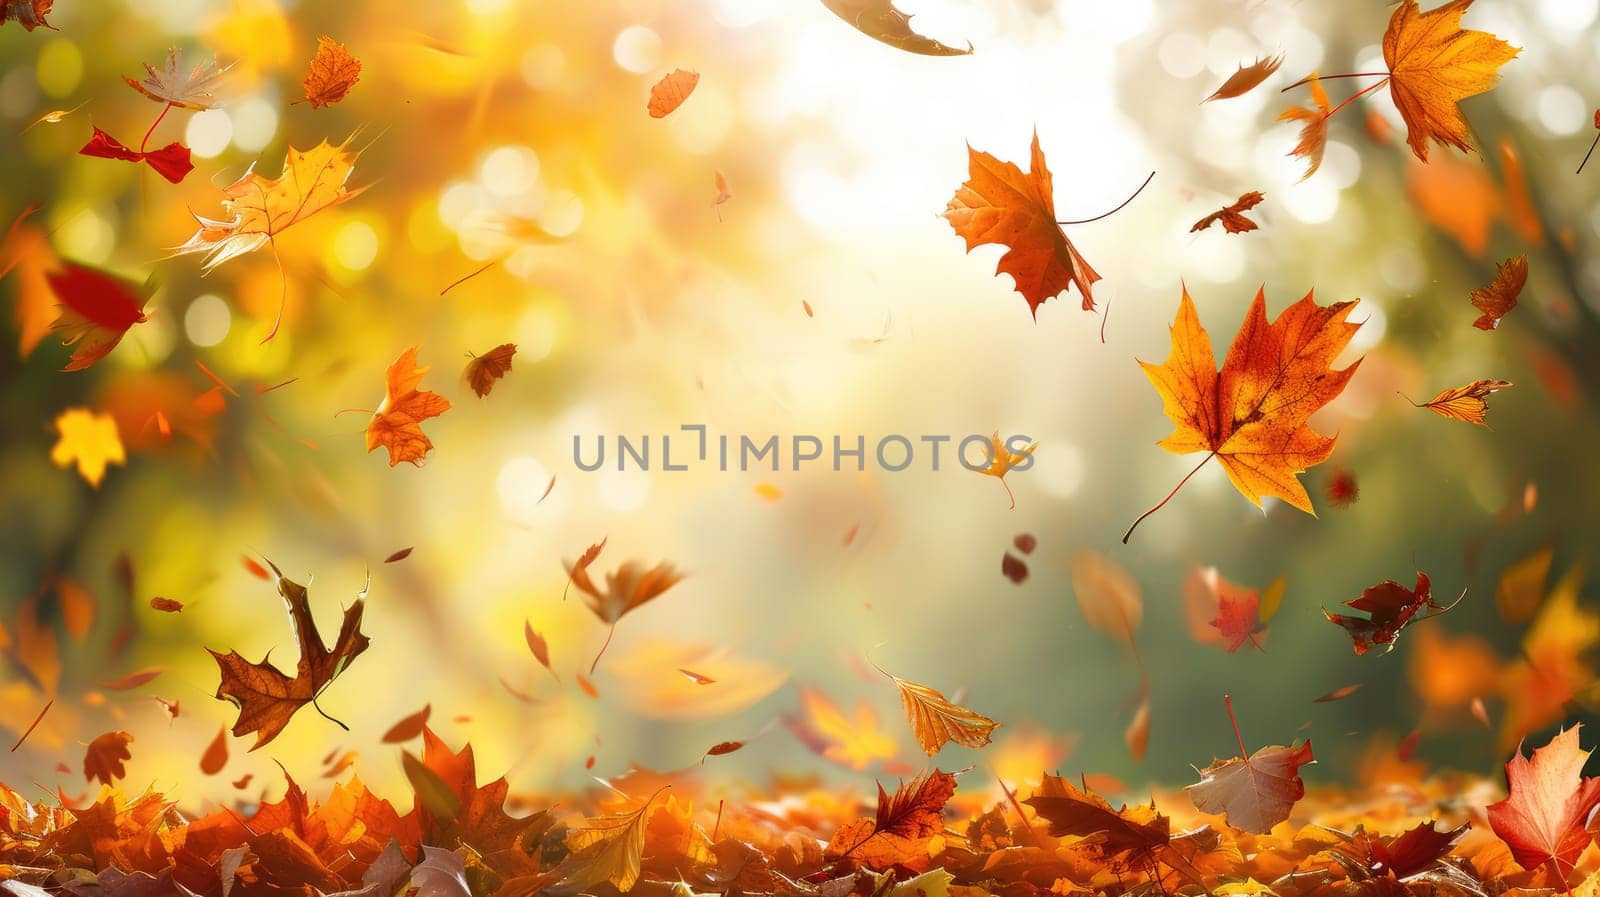 Yellow leaves falling in autumn garden by Yurich32